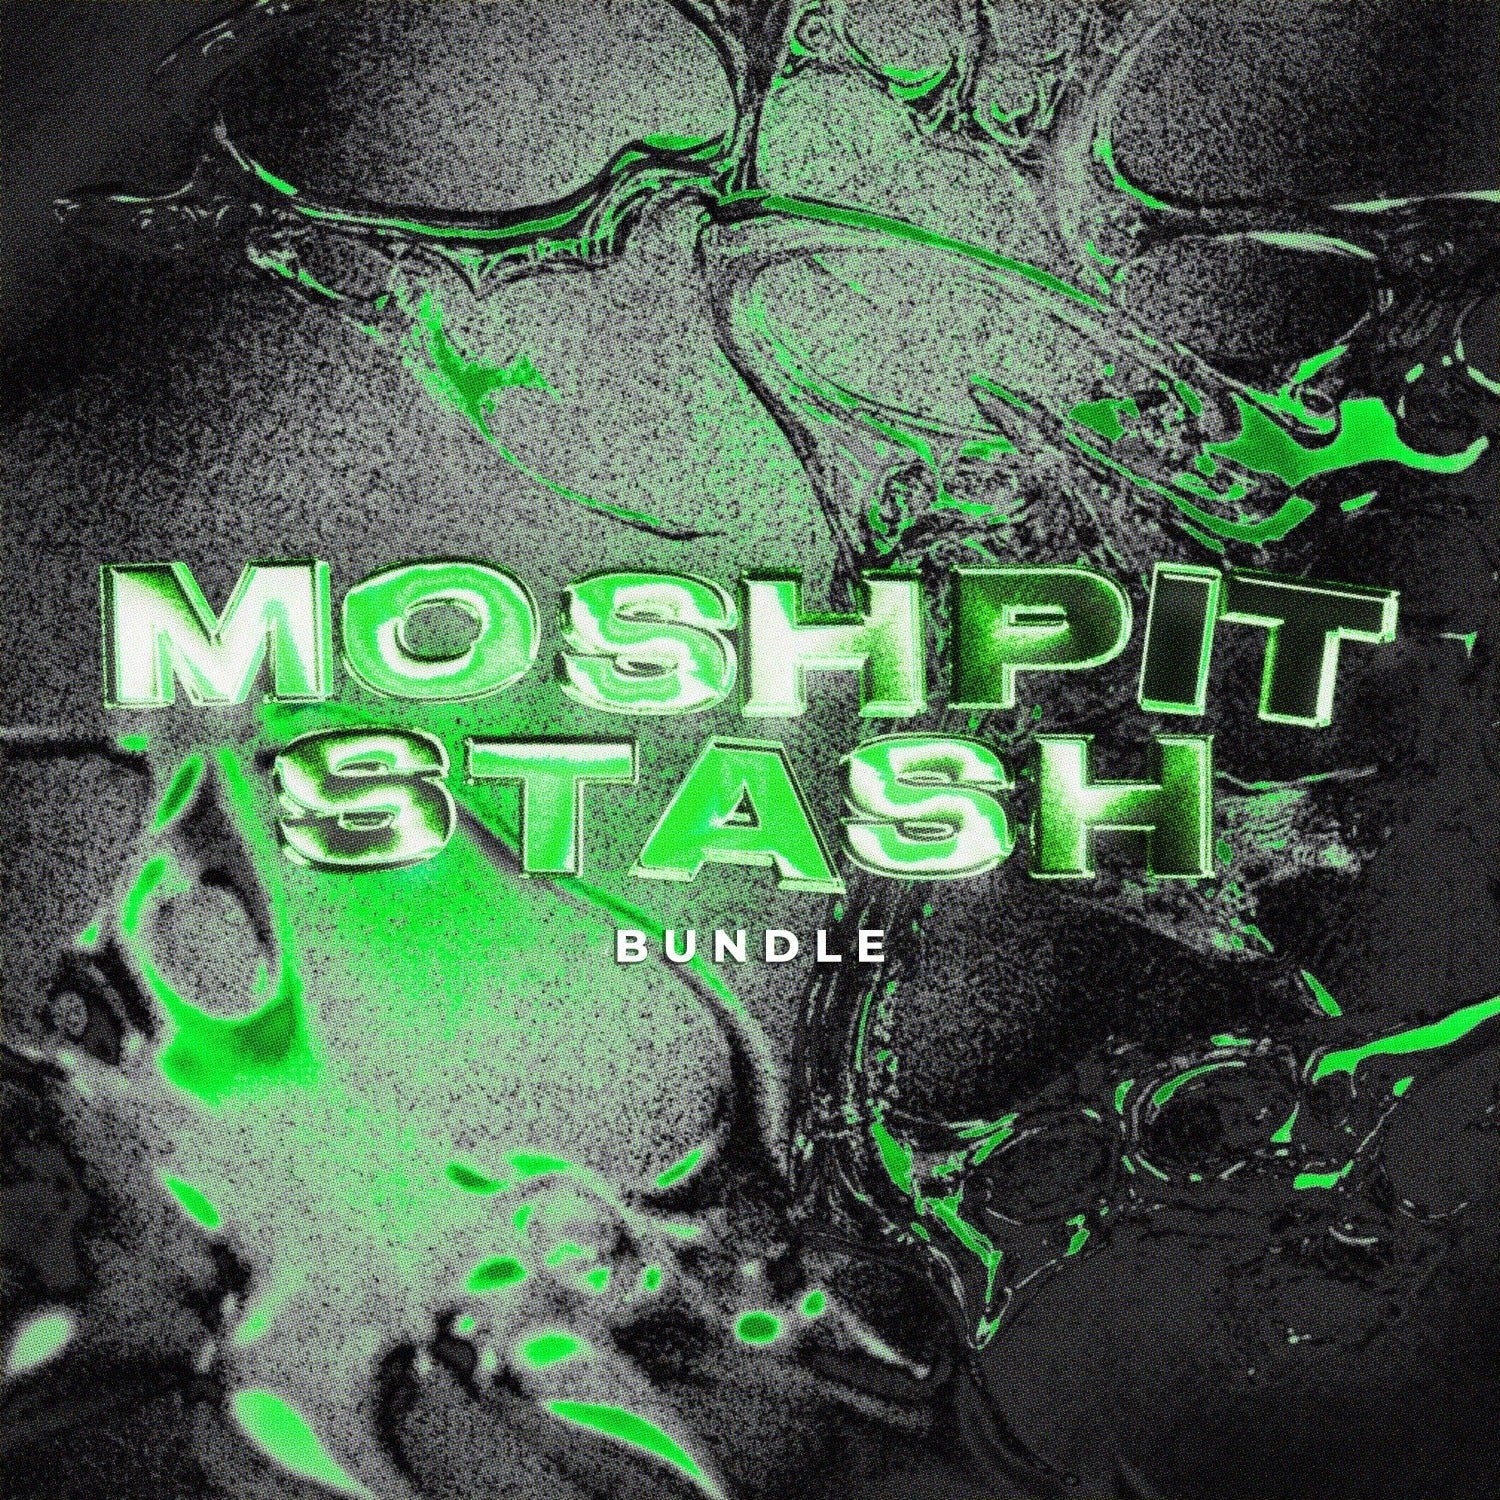 Moshpit Stash (Bundle) - Thirteen Tecc Records